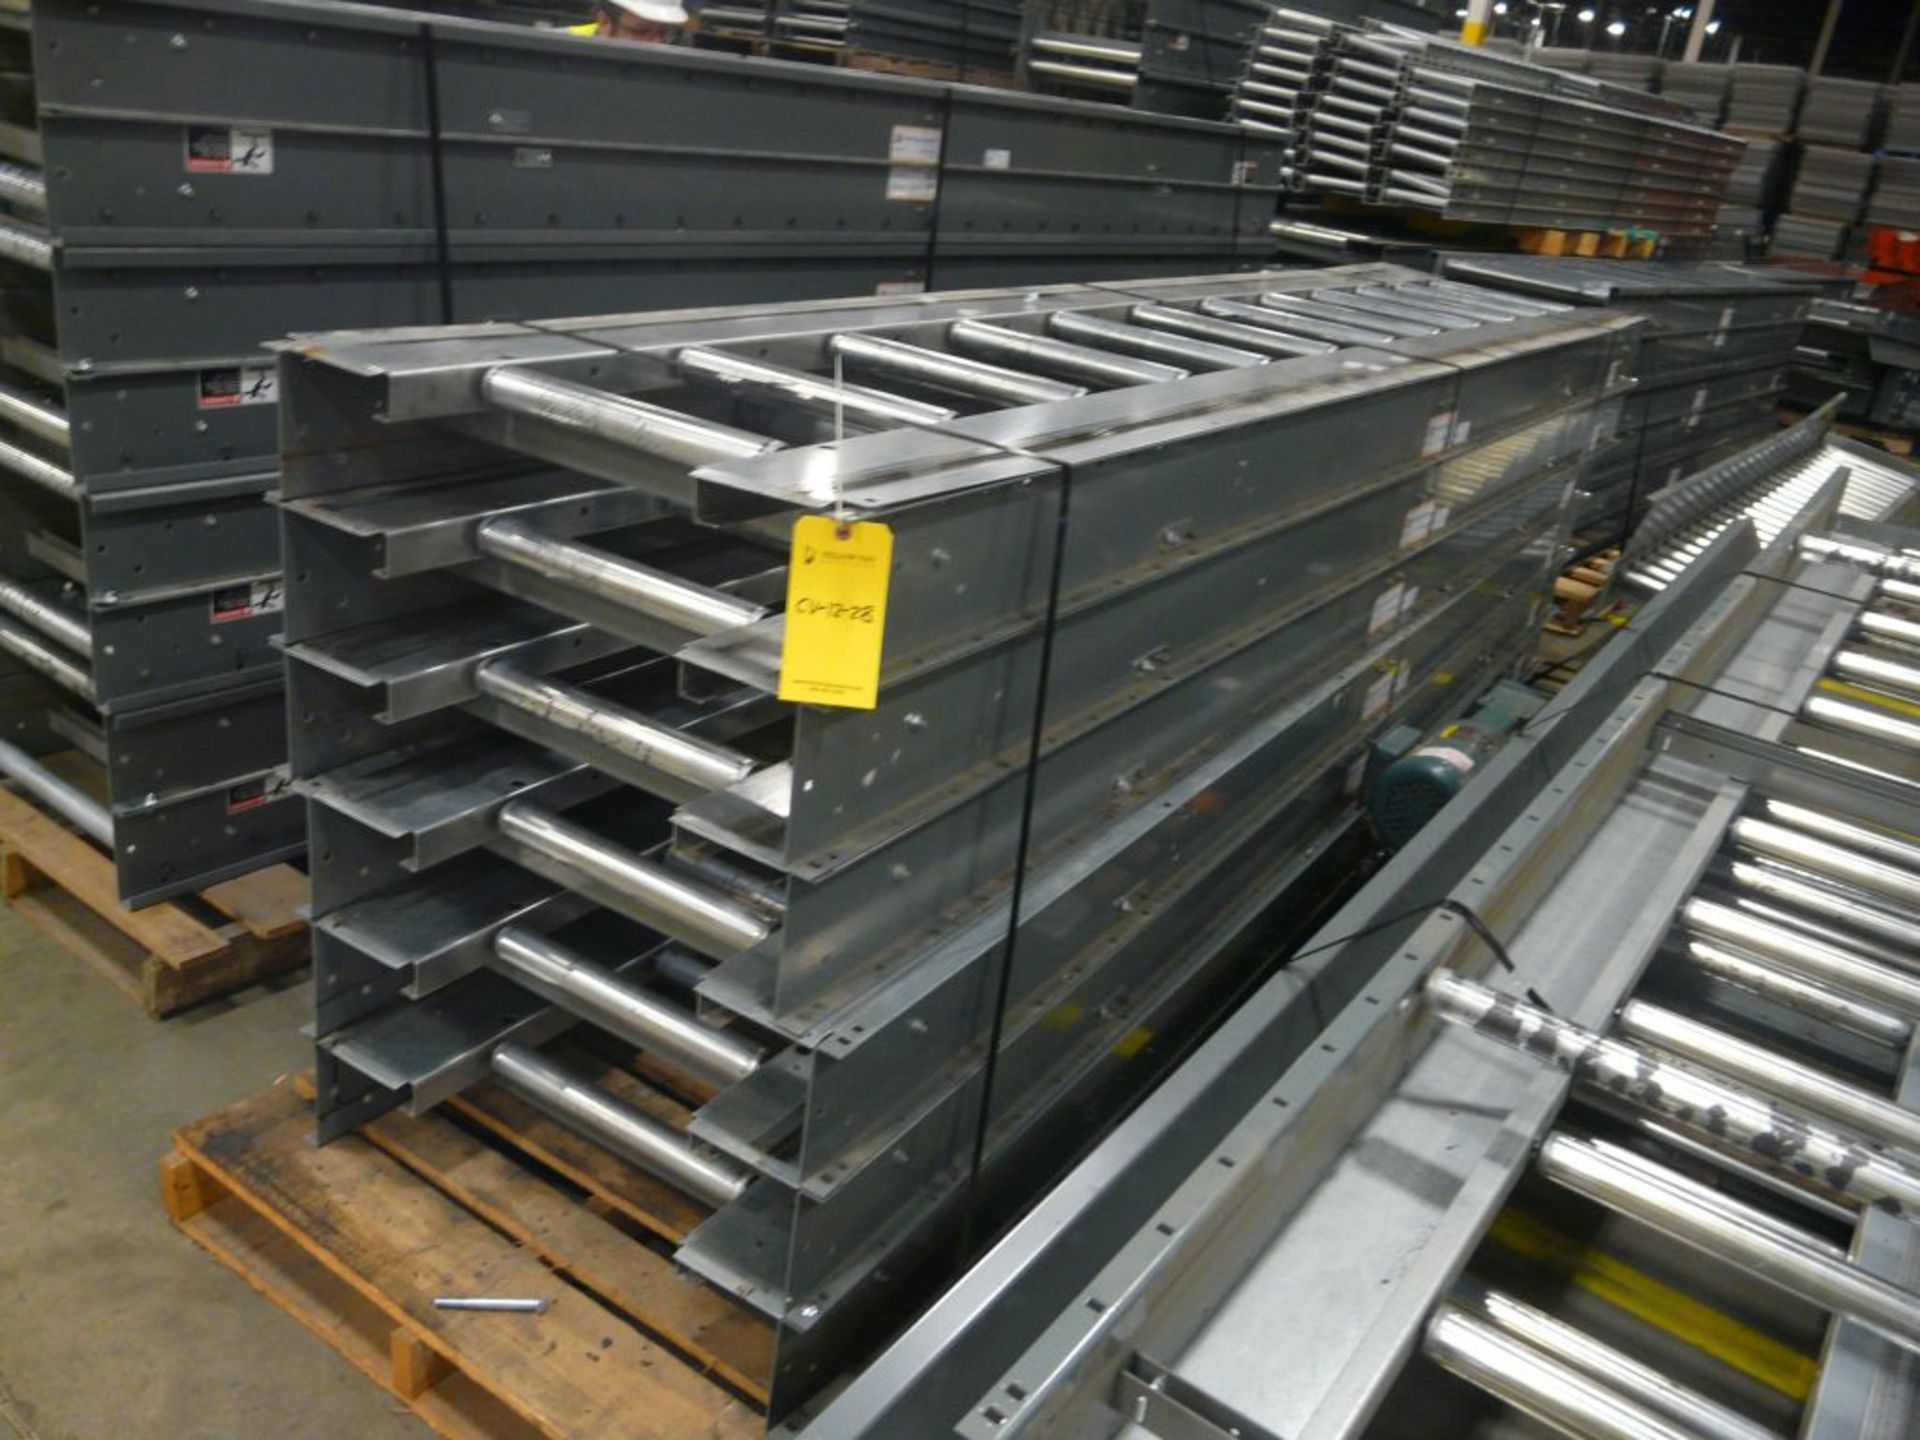 Lot of (6) 200 Belt Intermediate Conveyors - 12'L x 28"W; Tag: 223703 - $30 Lot Loading Fee